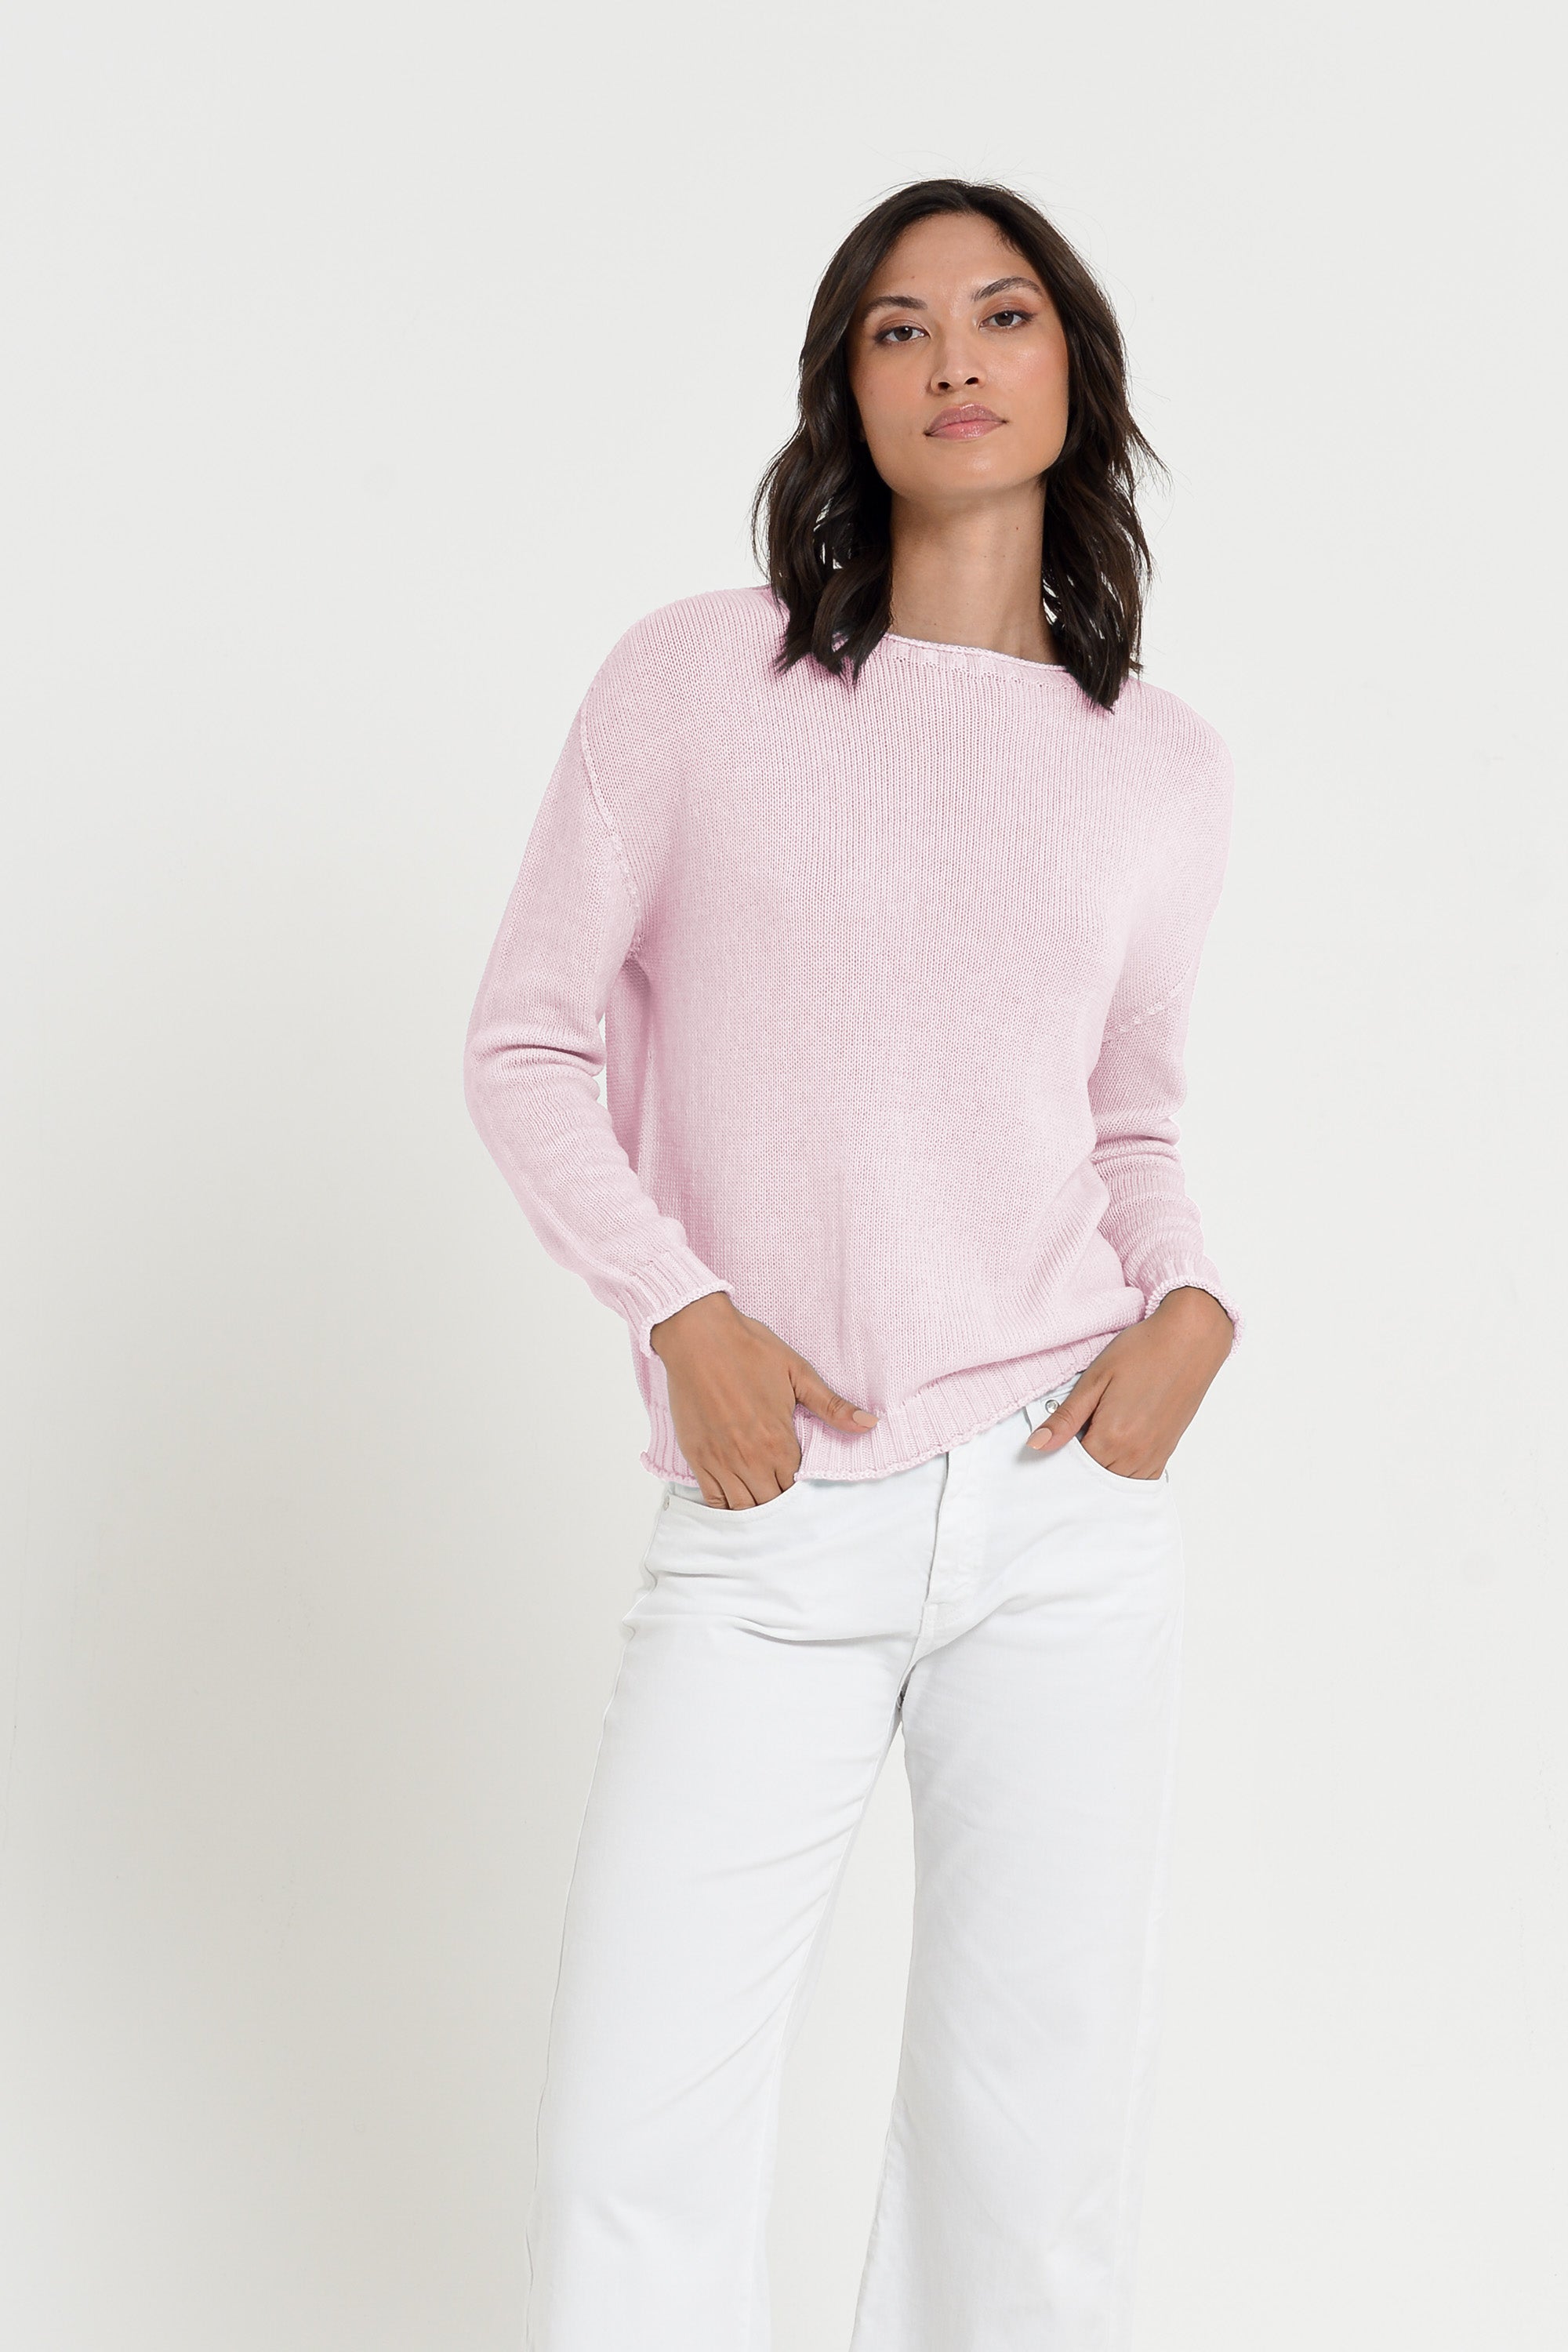 Vaze Knit - Women's Cotton Knit Sweater - Rose